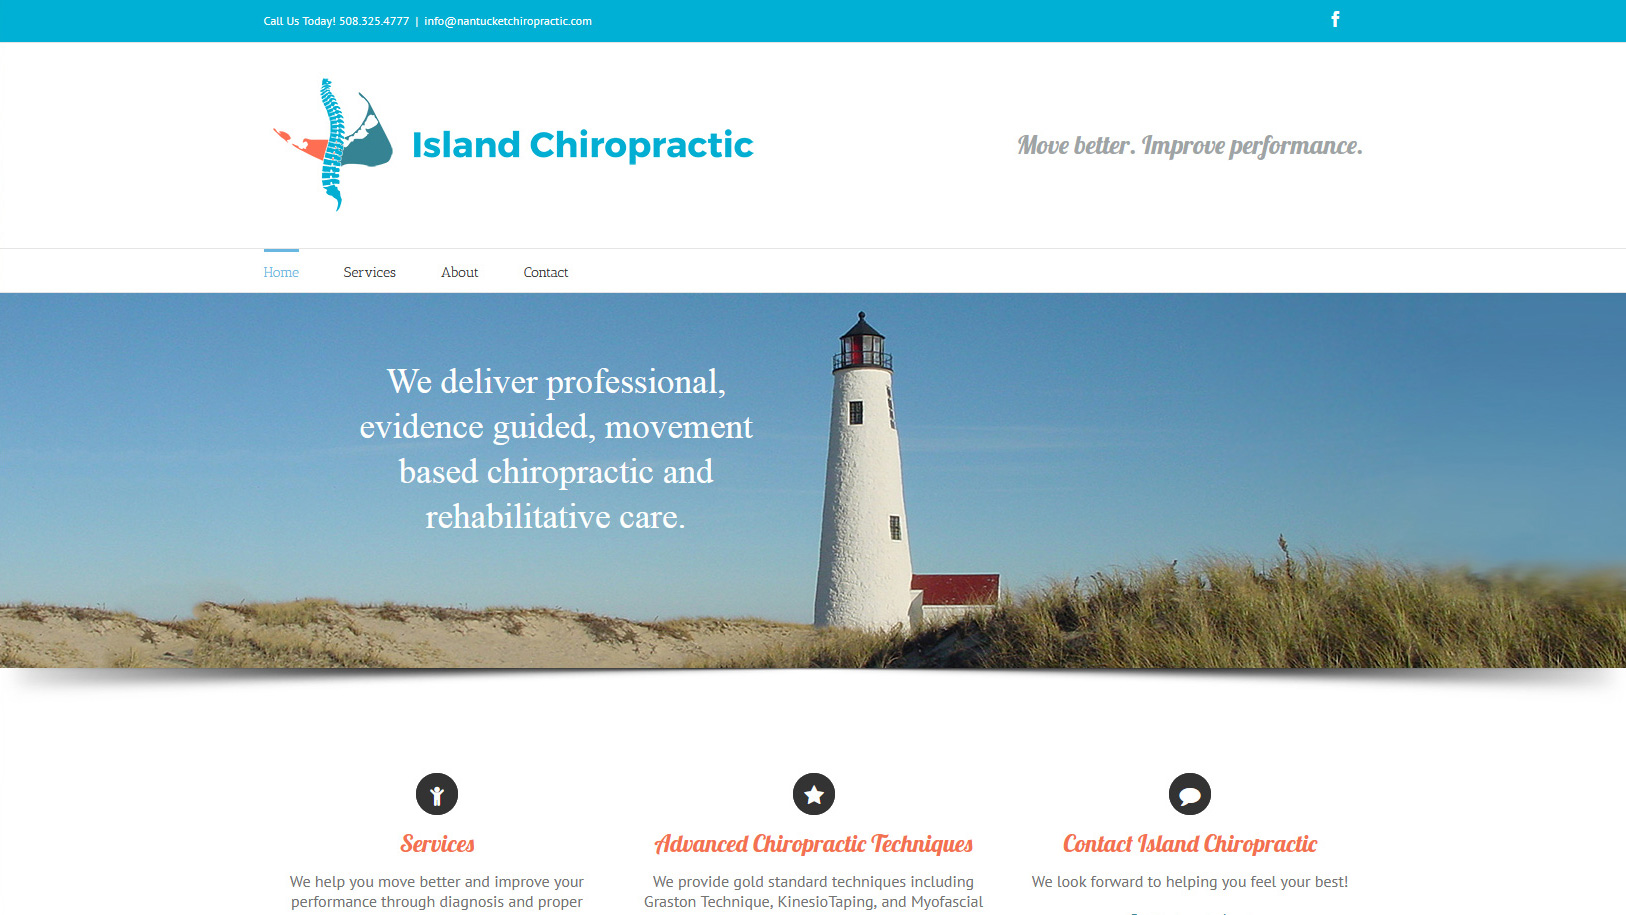 Portfilio Island Chiropractic website design